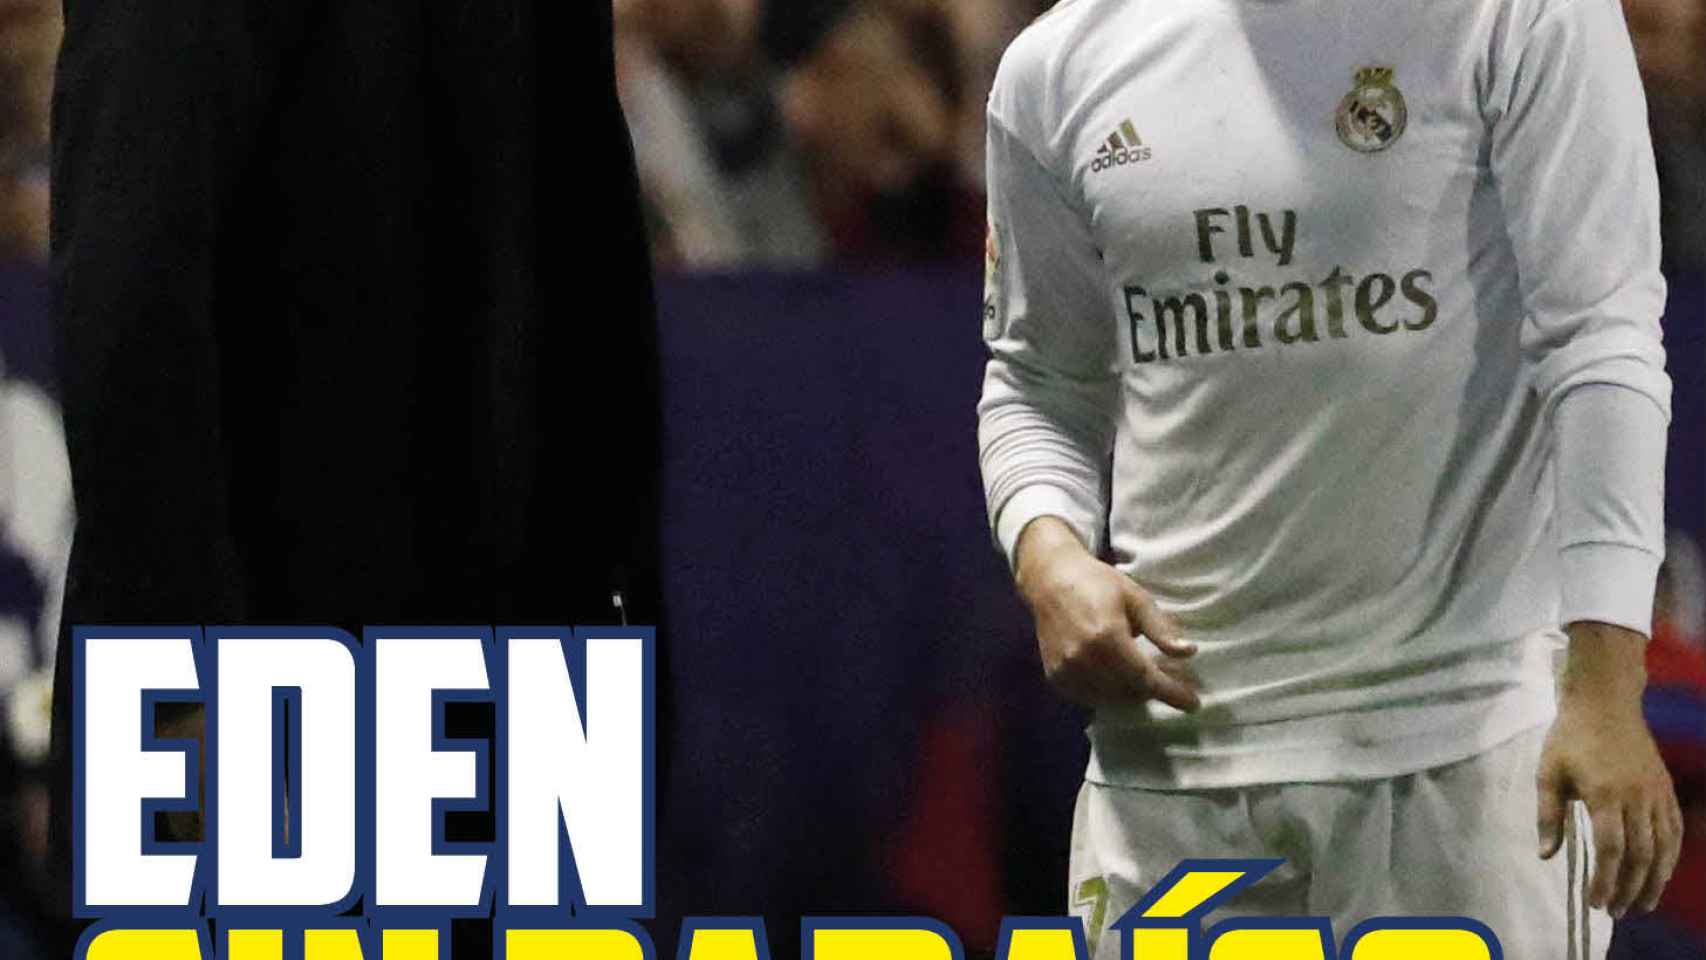 La portada de El Bernabéu (25/02/2020)